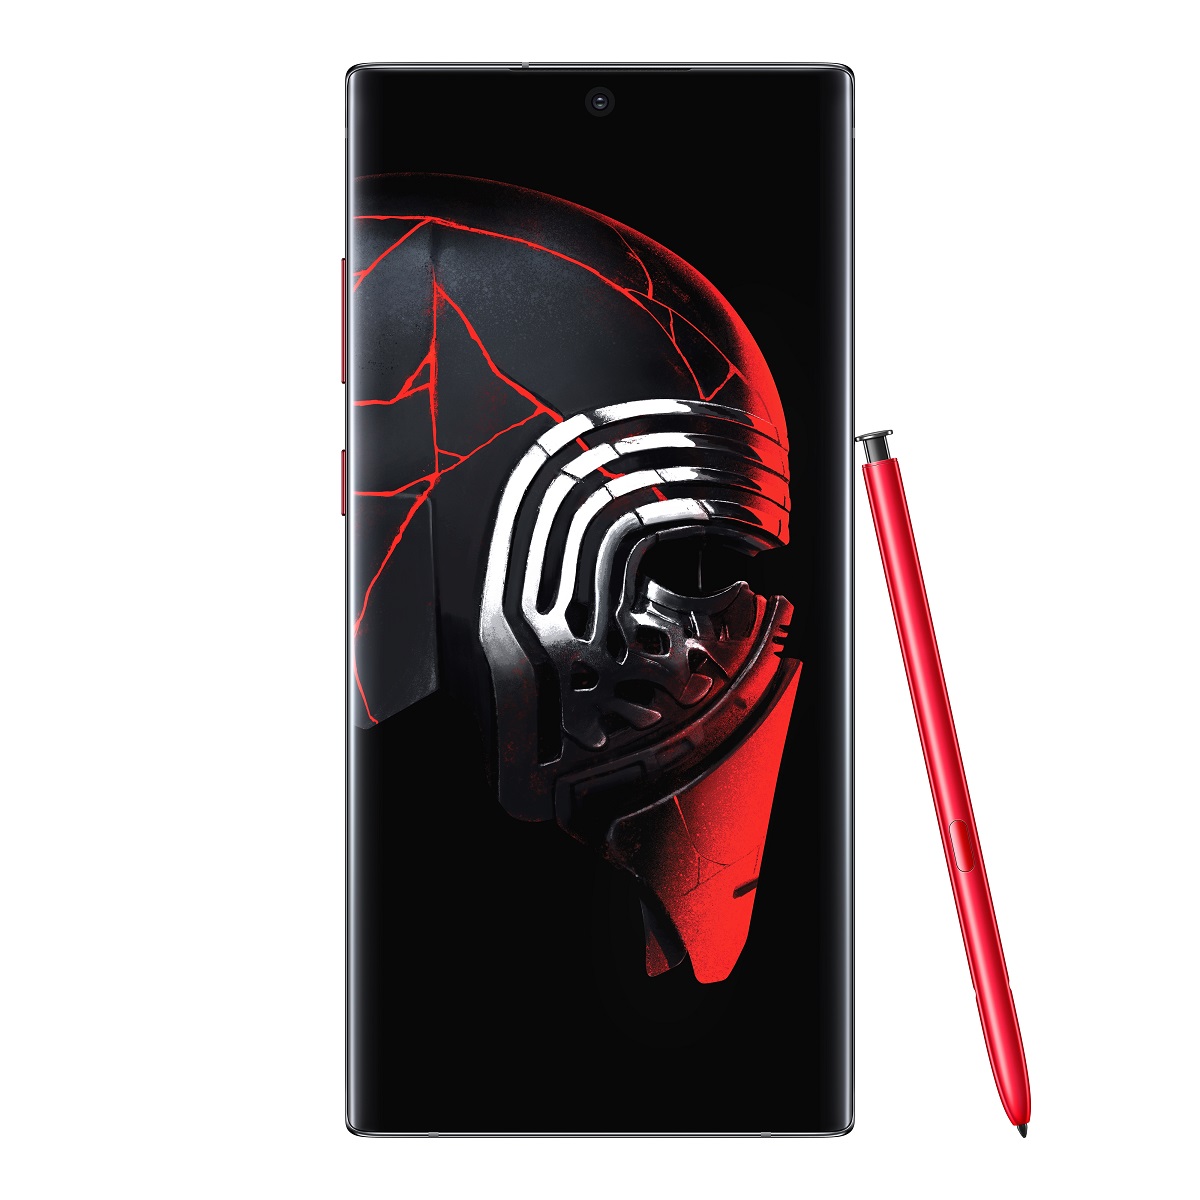 Samsung presenta un Note 10+ Star Wars Edition